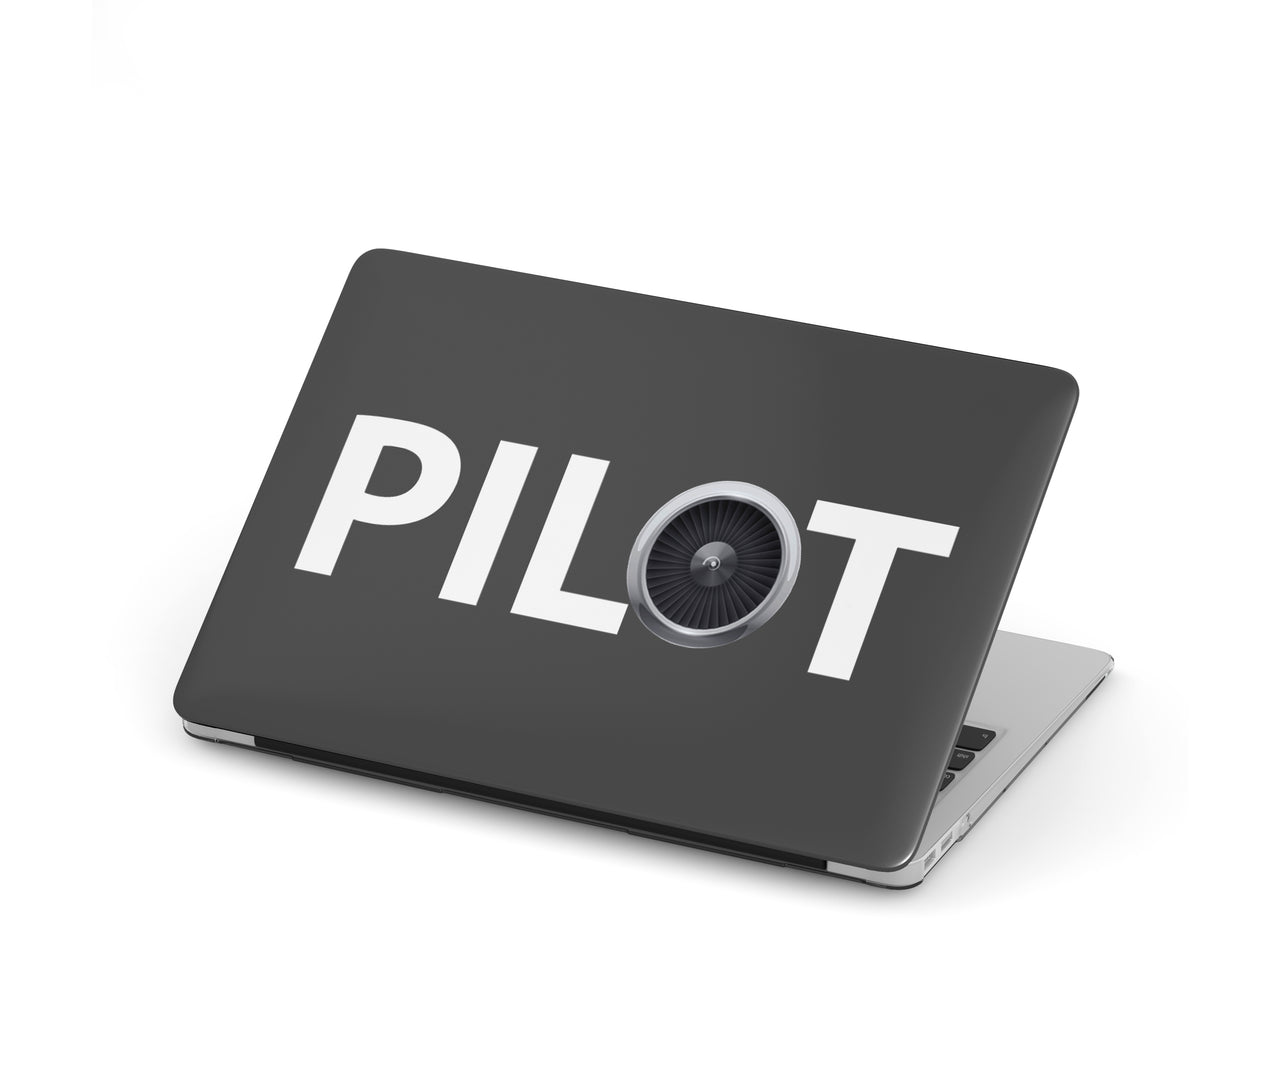 Pilot & Jet Engine Designed Macbook Cases